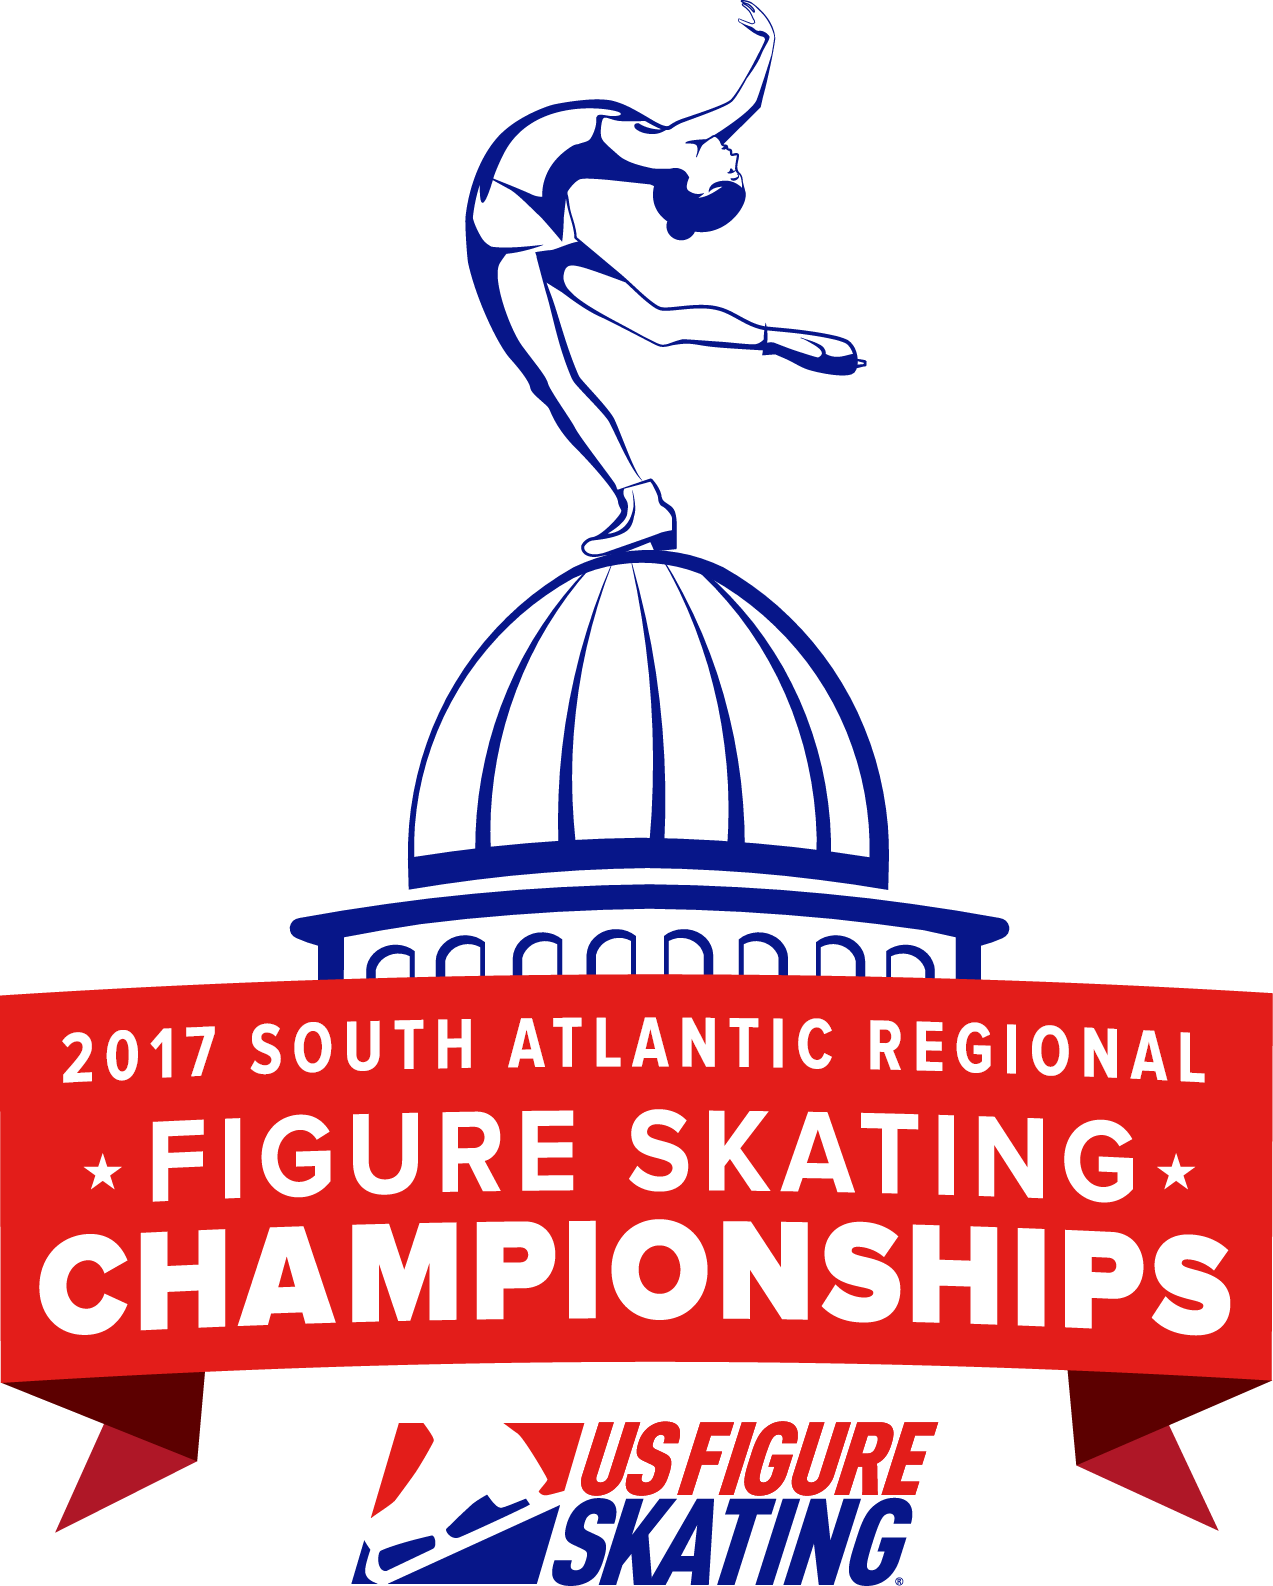 South Atlantic Regional Championships - Us Figure Skating (1273x1586)